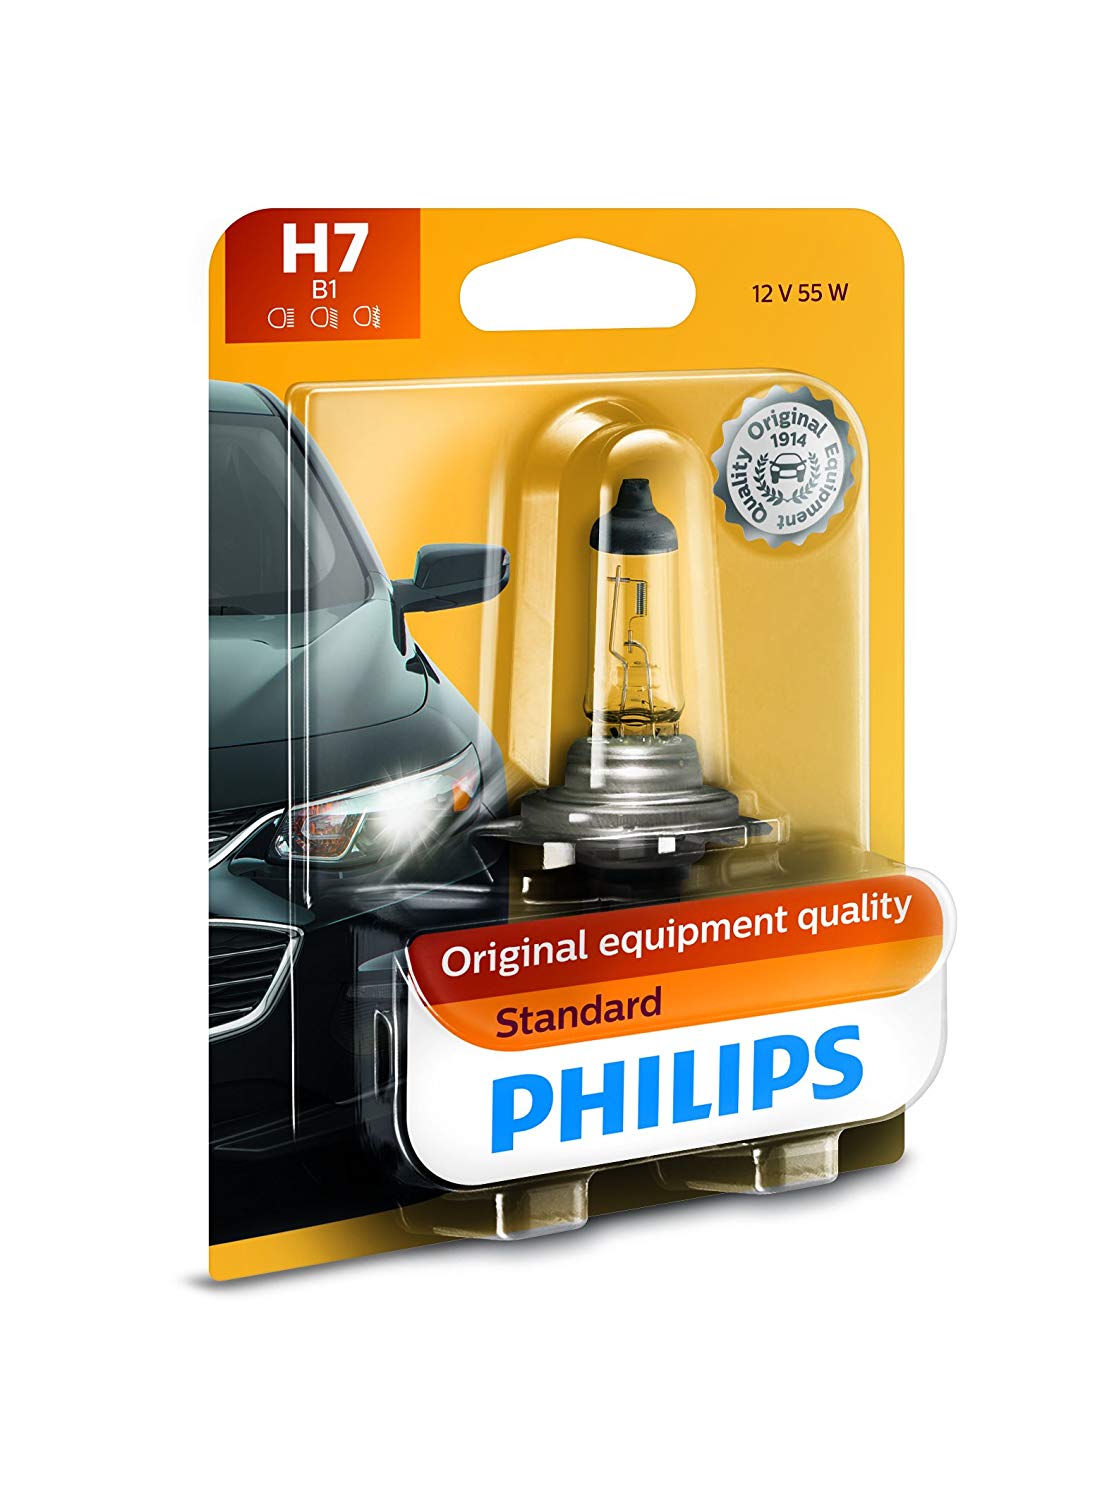 Philips 7783philips X-tremevision Pro150 H7 55w Halogen Headlight Bulbs  2-pack